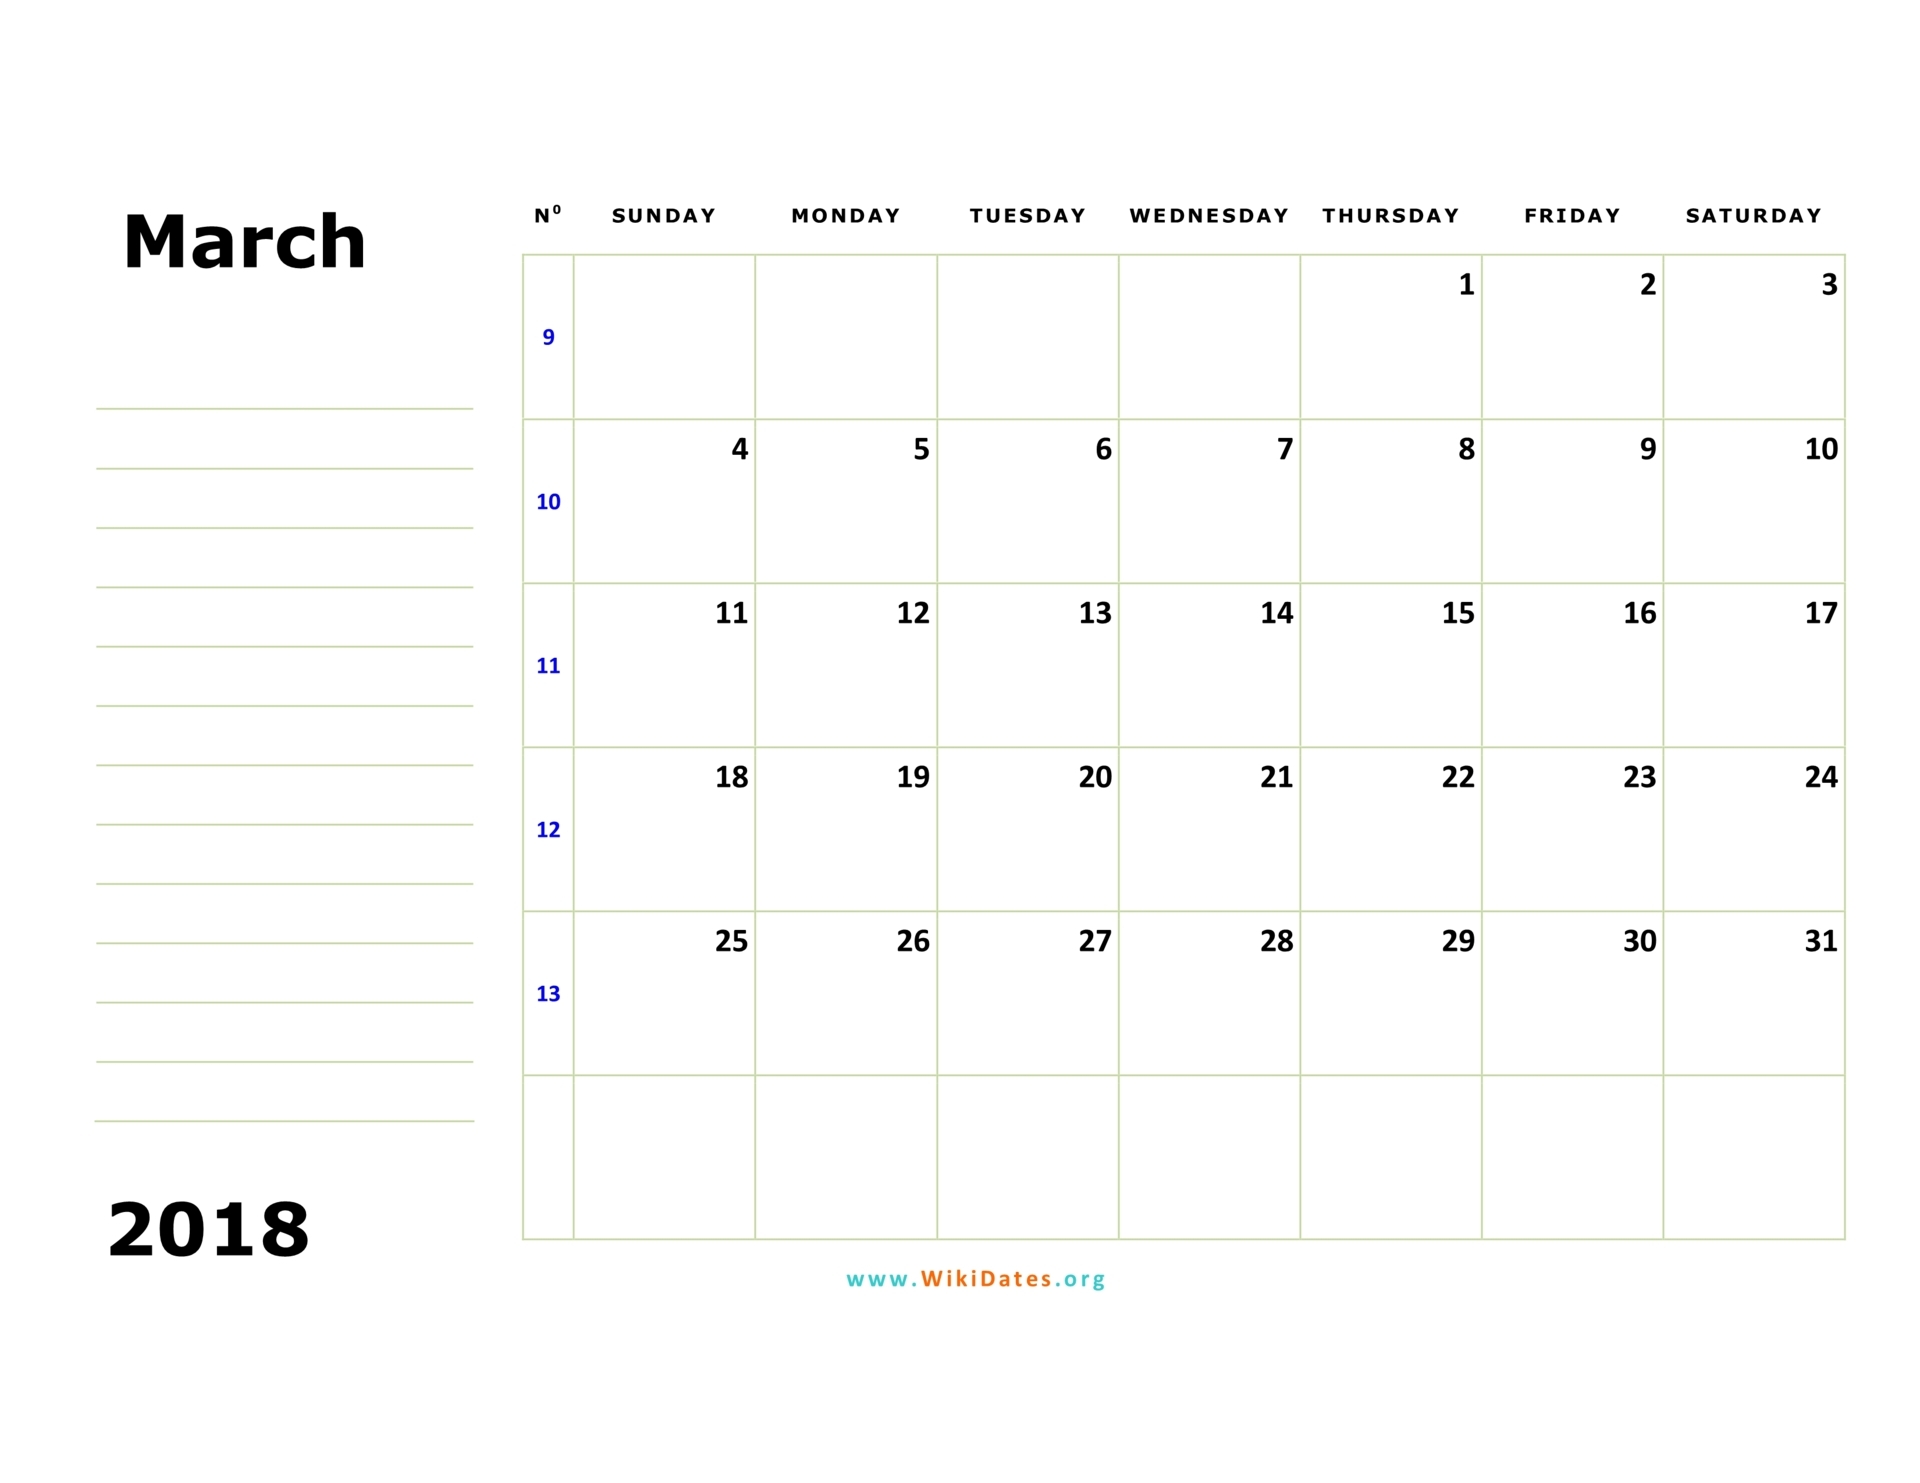 march-2018-calendar-wikidates